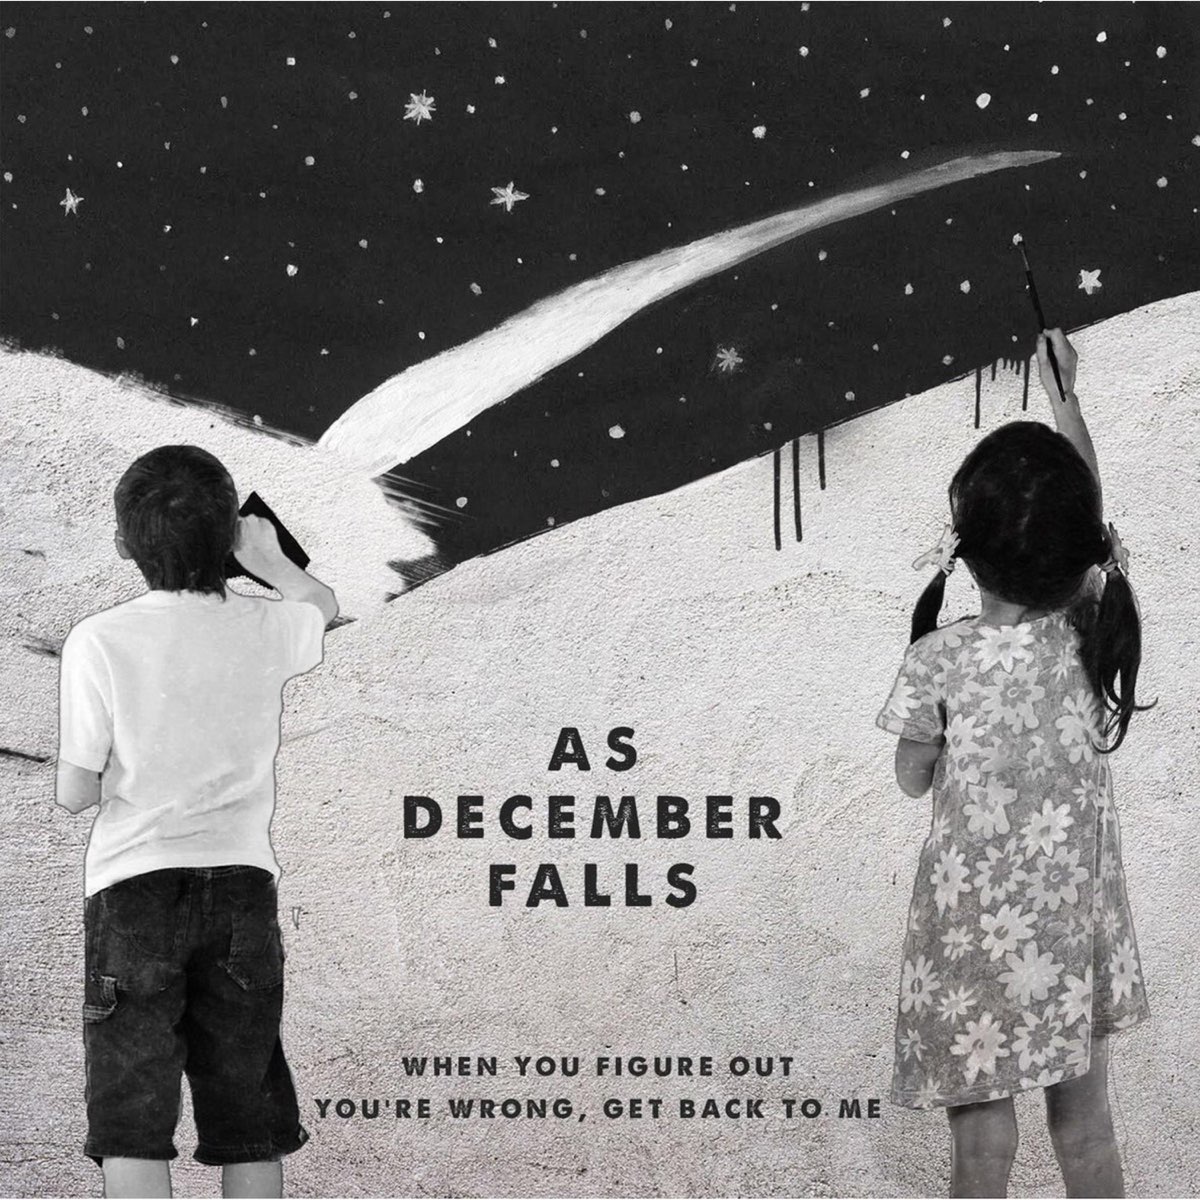 You ve got wrong house. As December Falls. Back to December. Get back to me. As December Falls - Carousel.